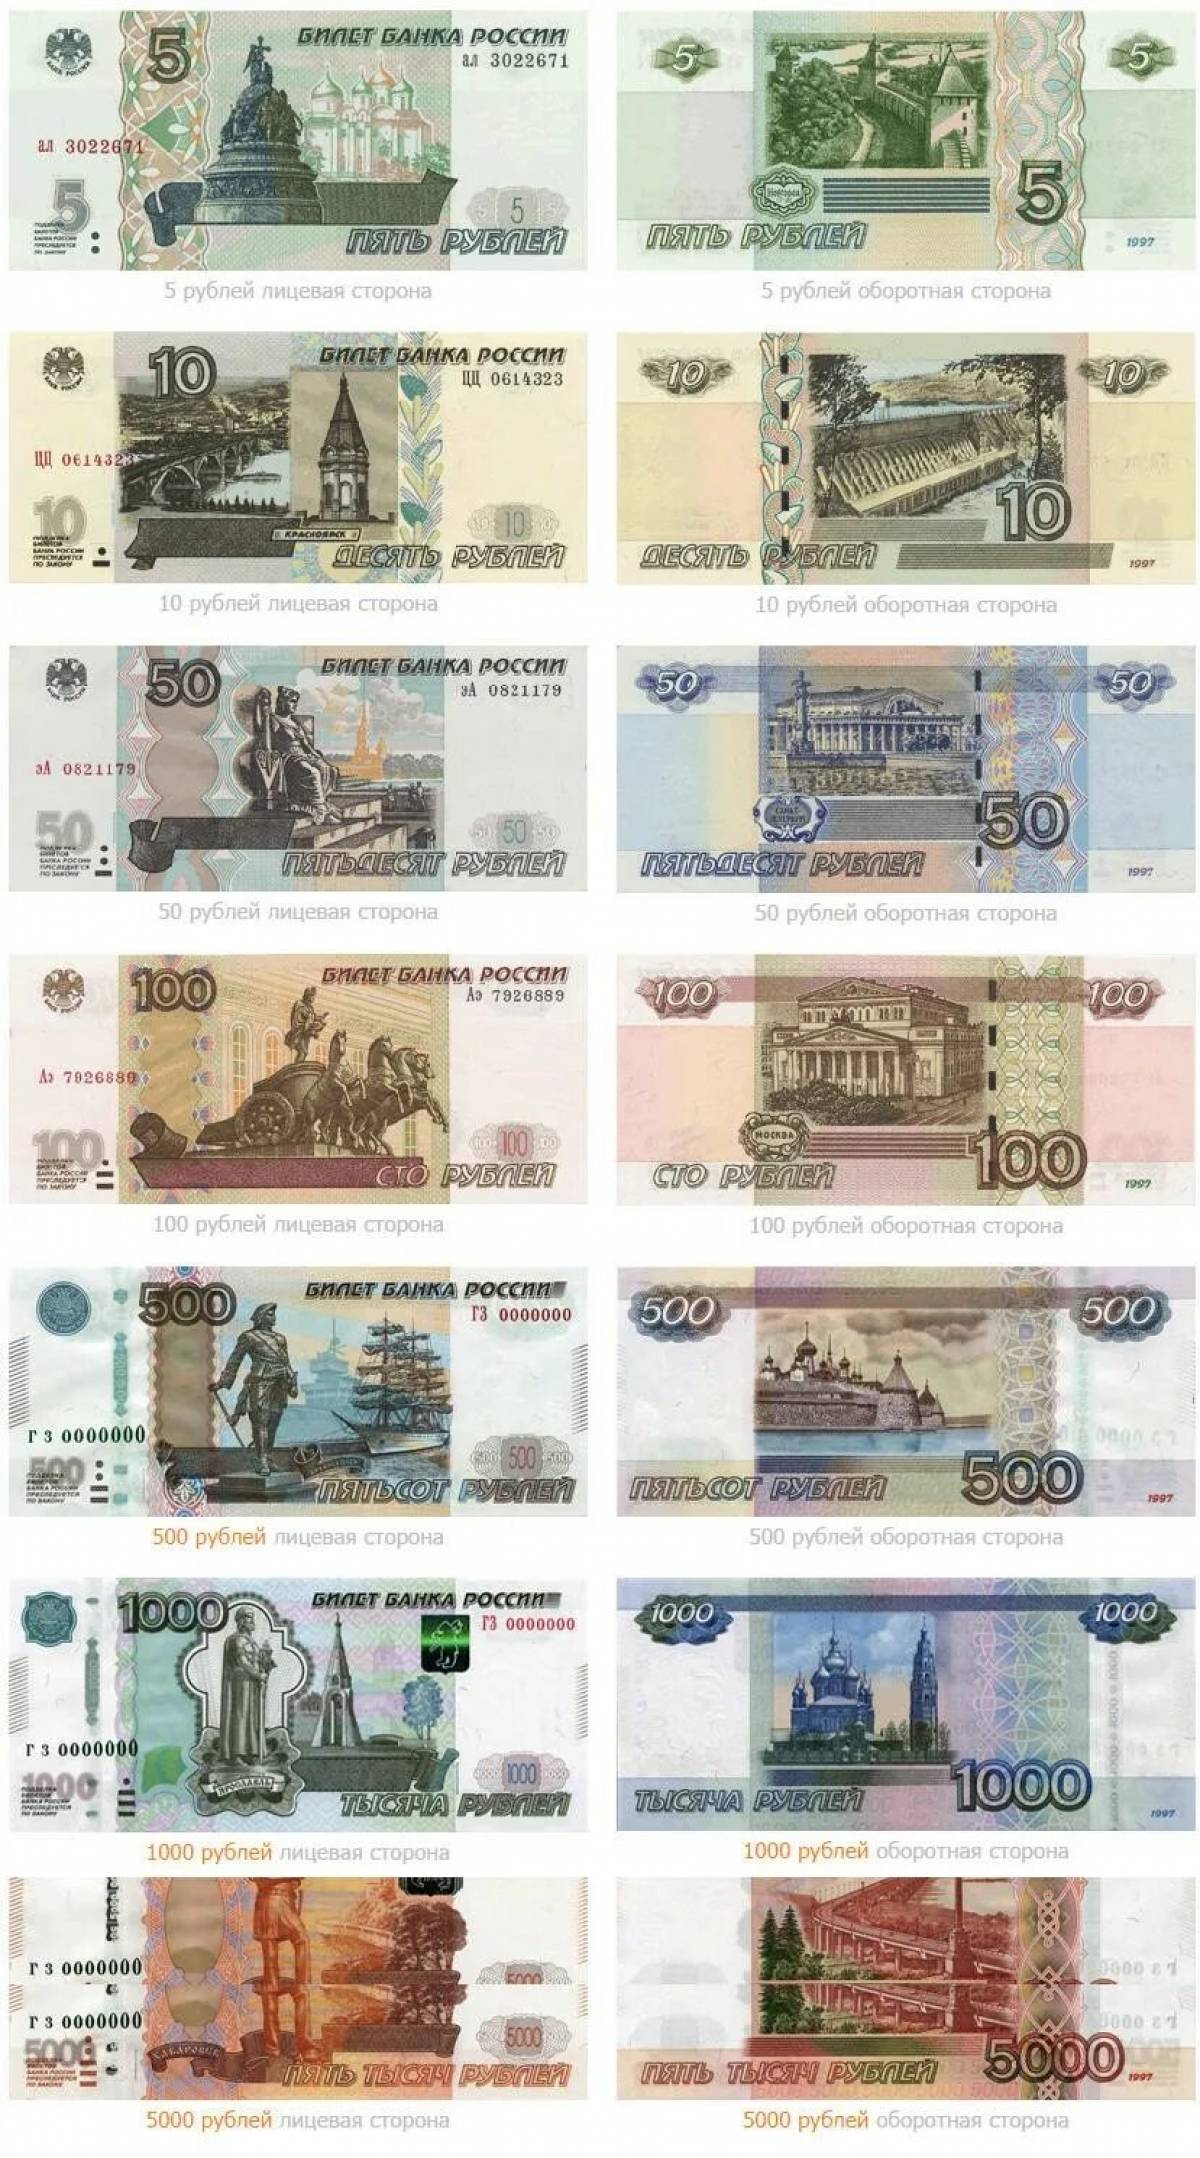 Coloring serene Russian money